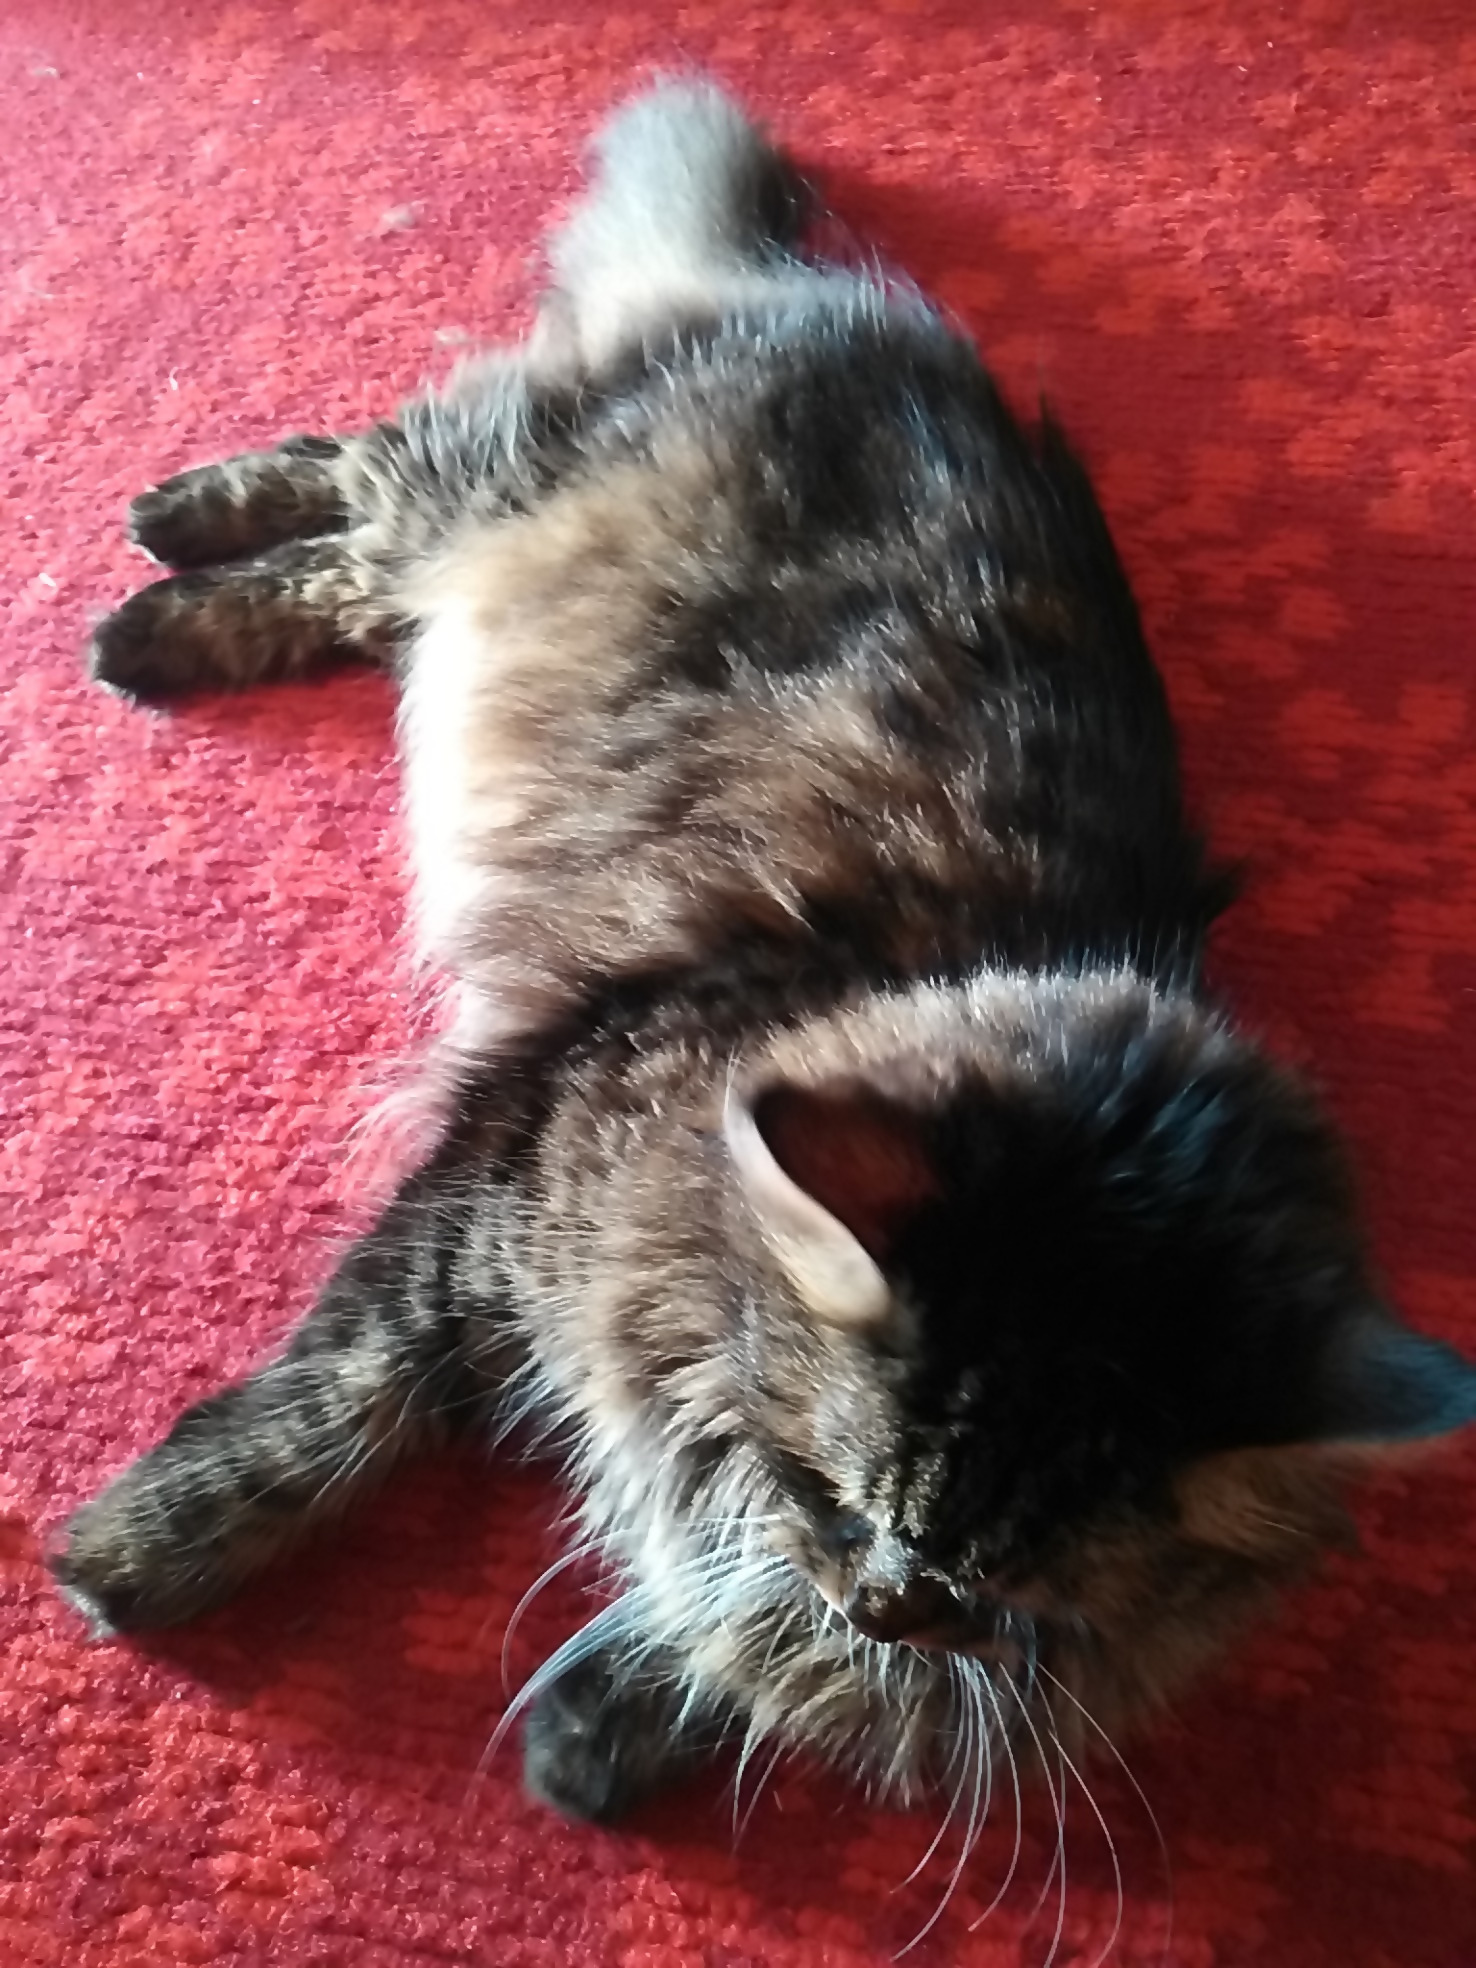 A Norwegian Forest Cat on a carpet